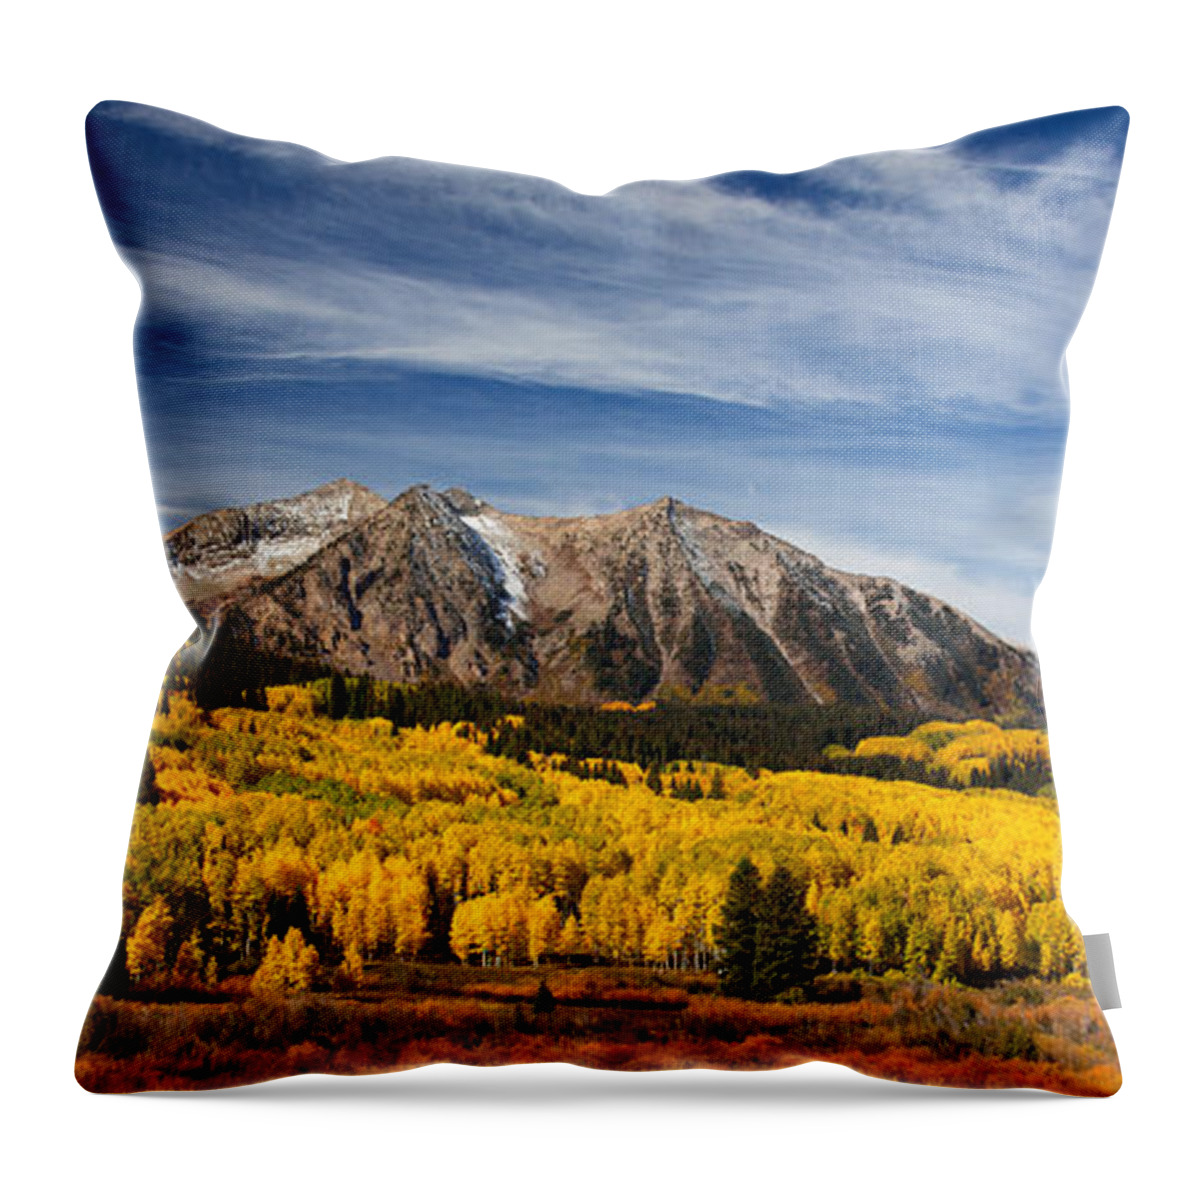 Colorado Throw Pillow featuring the photograph Fresh Air by Darren White